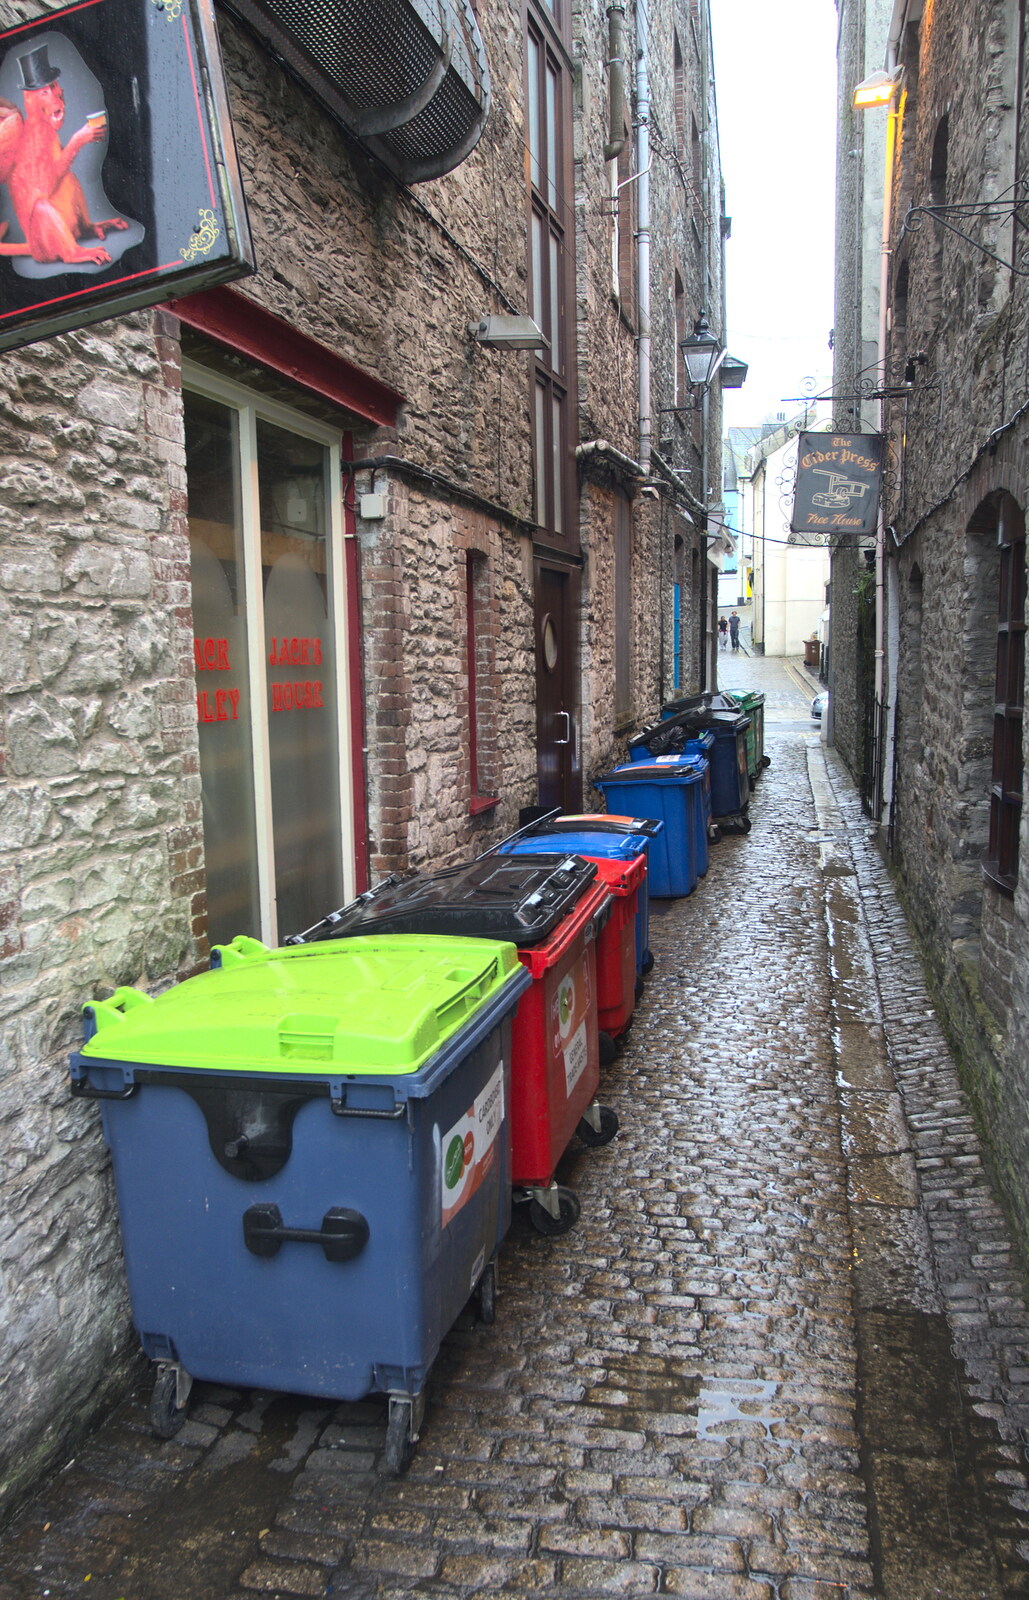 Barbican back street and bins from A Few Days in Spreyton, Devon - 26th October 2013